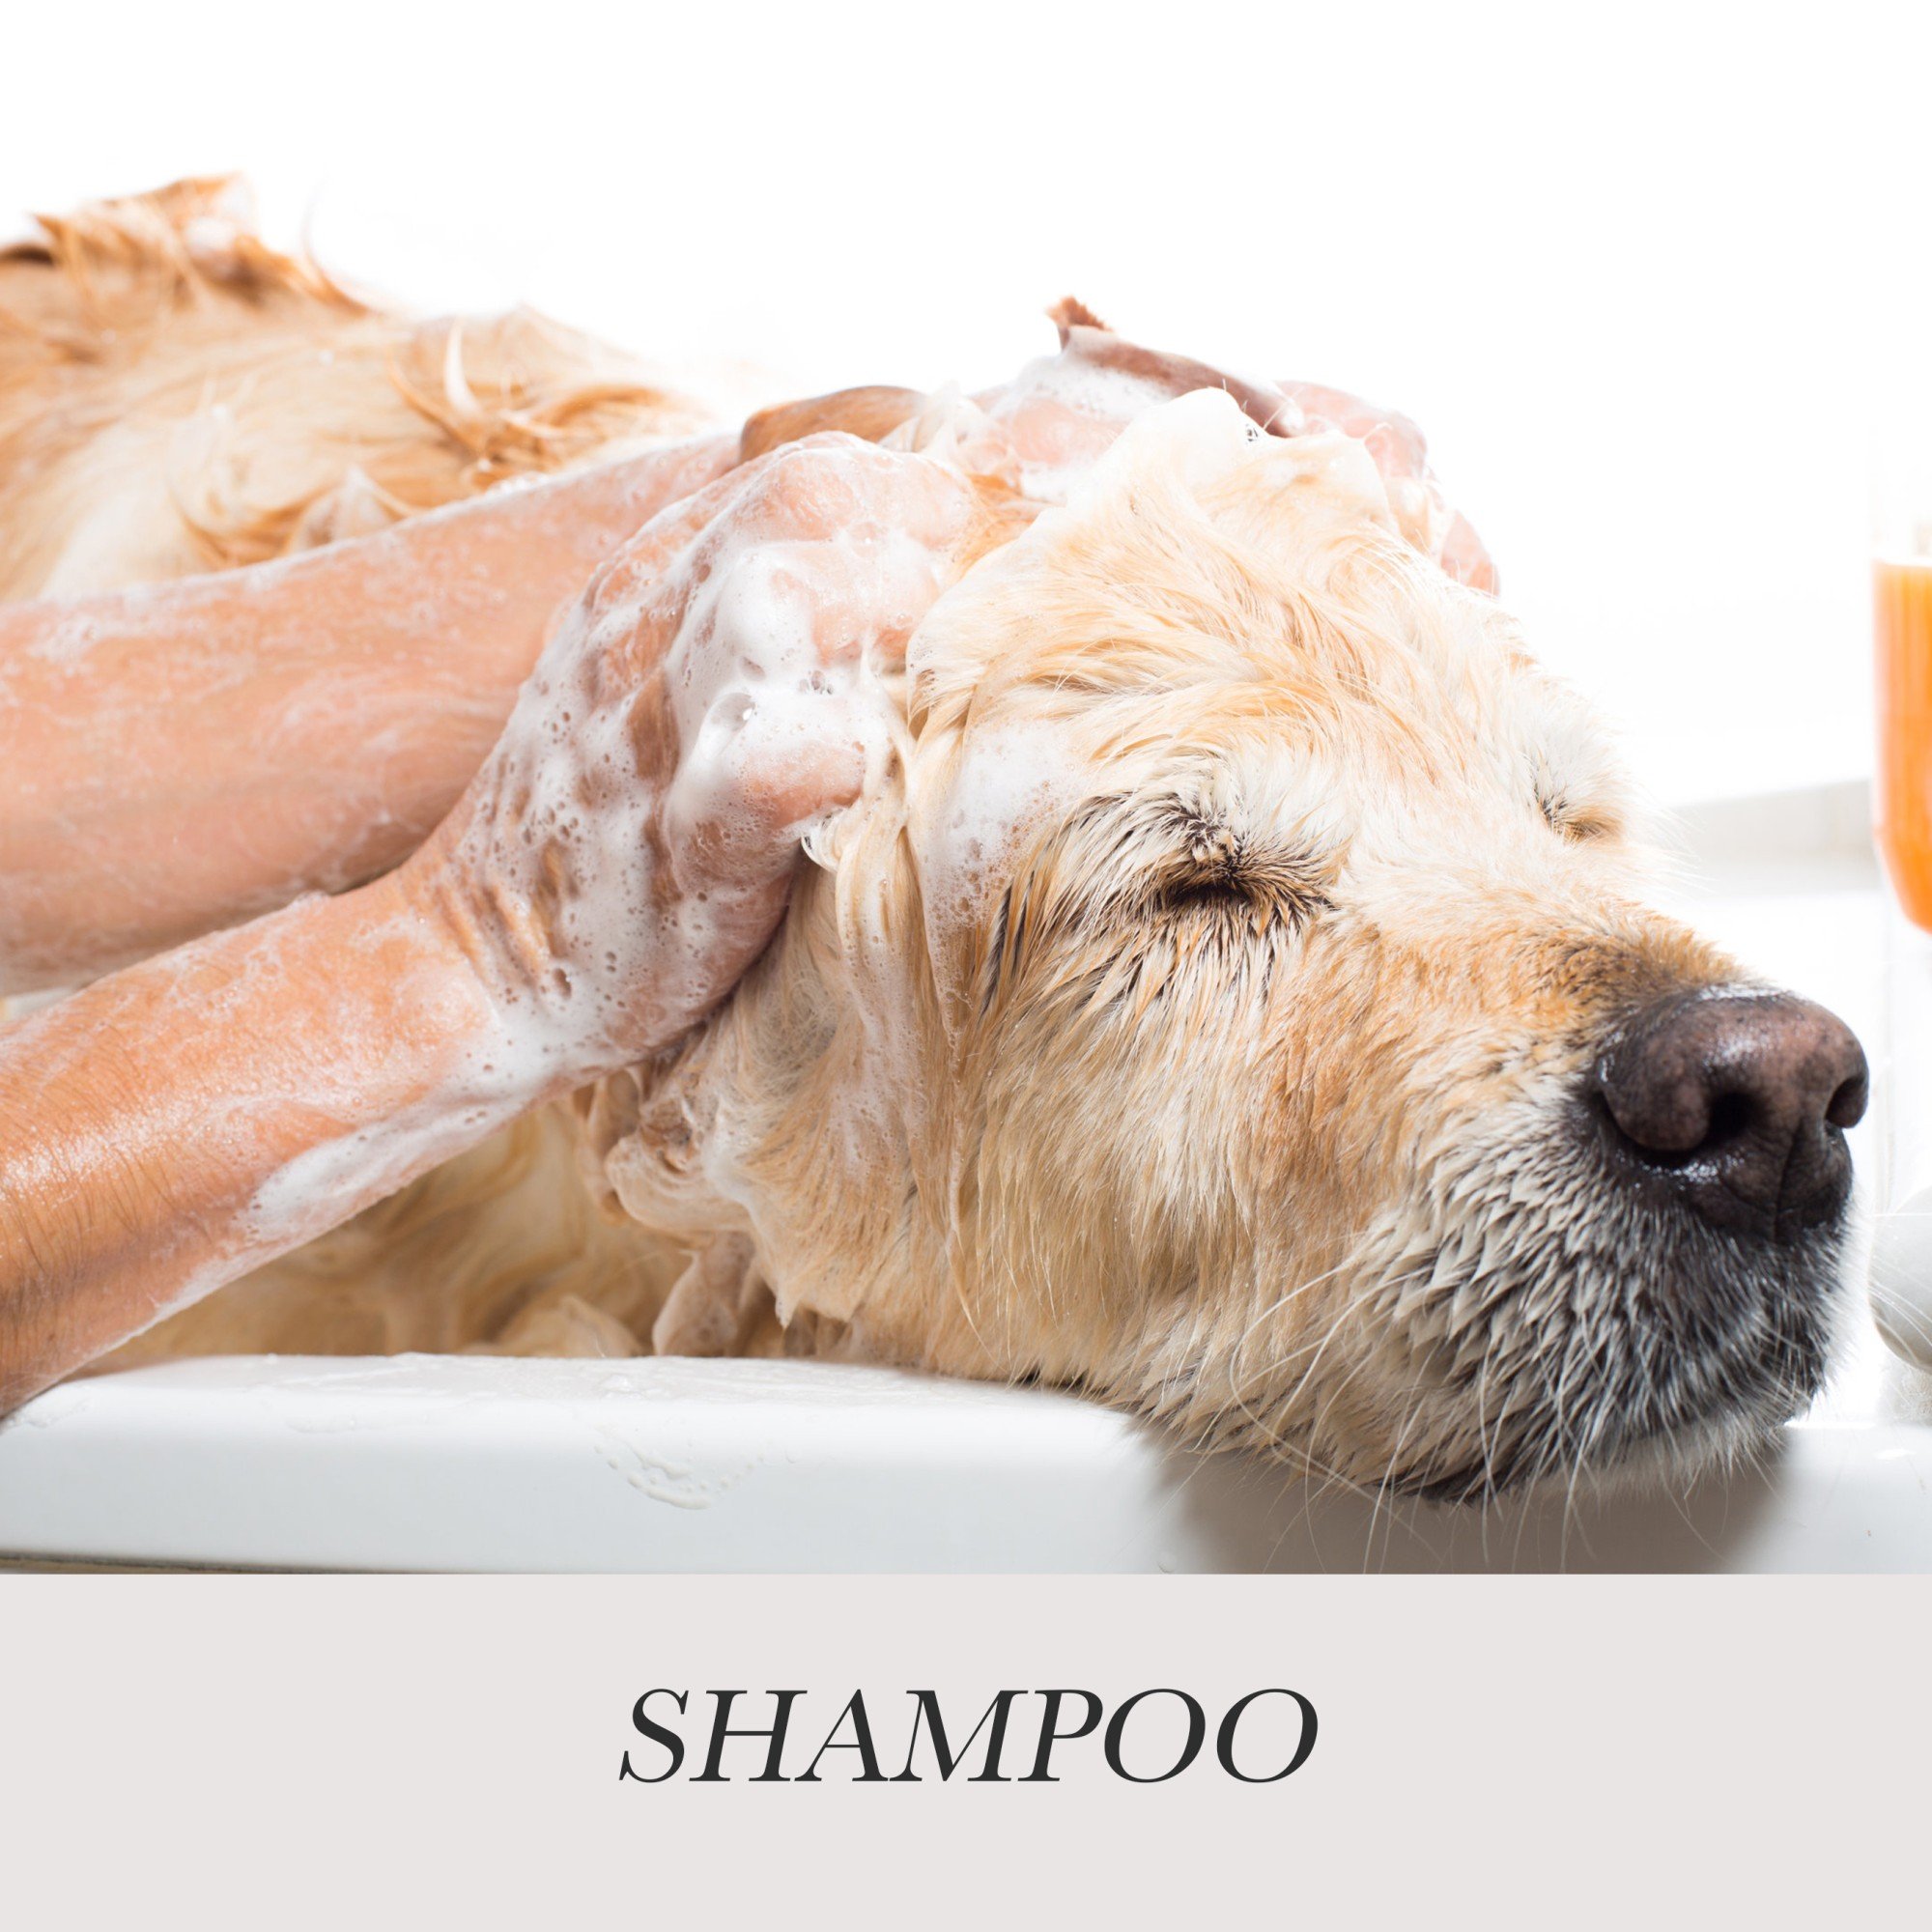 Shampoo - LaLuna PRO AS